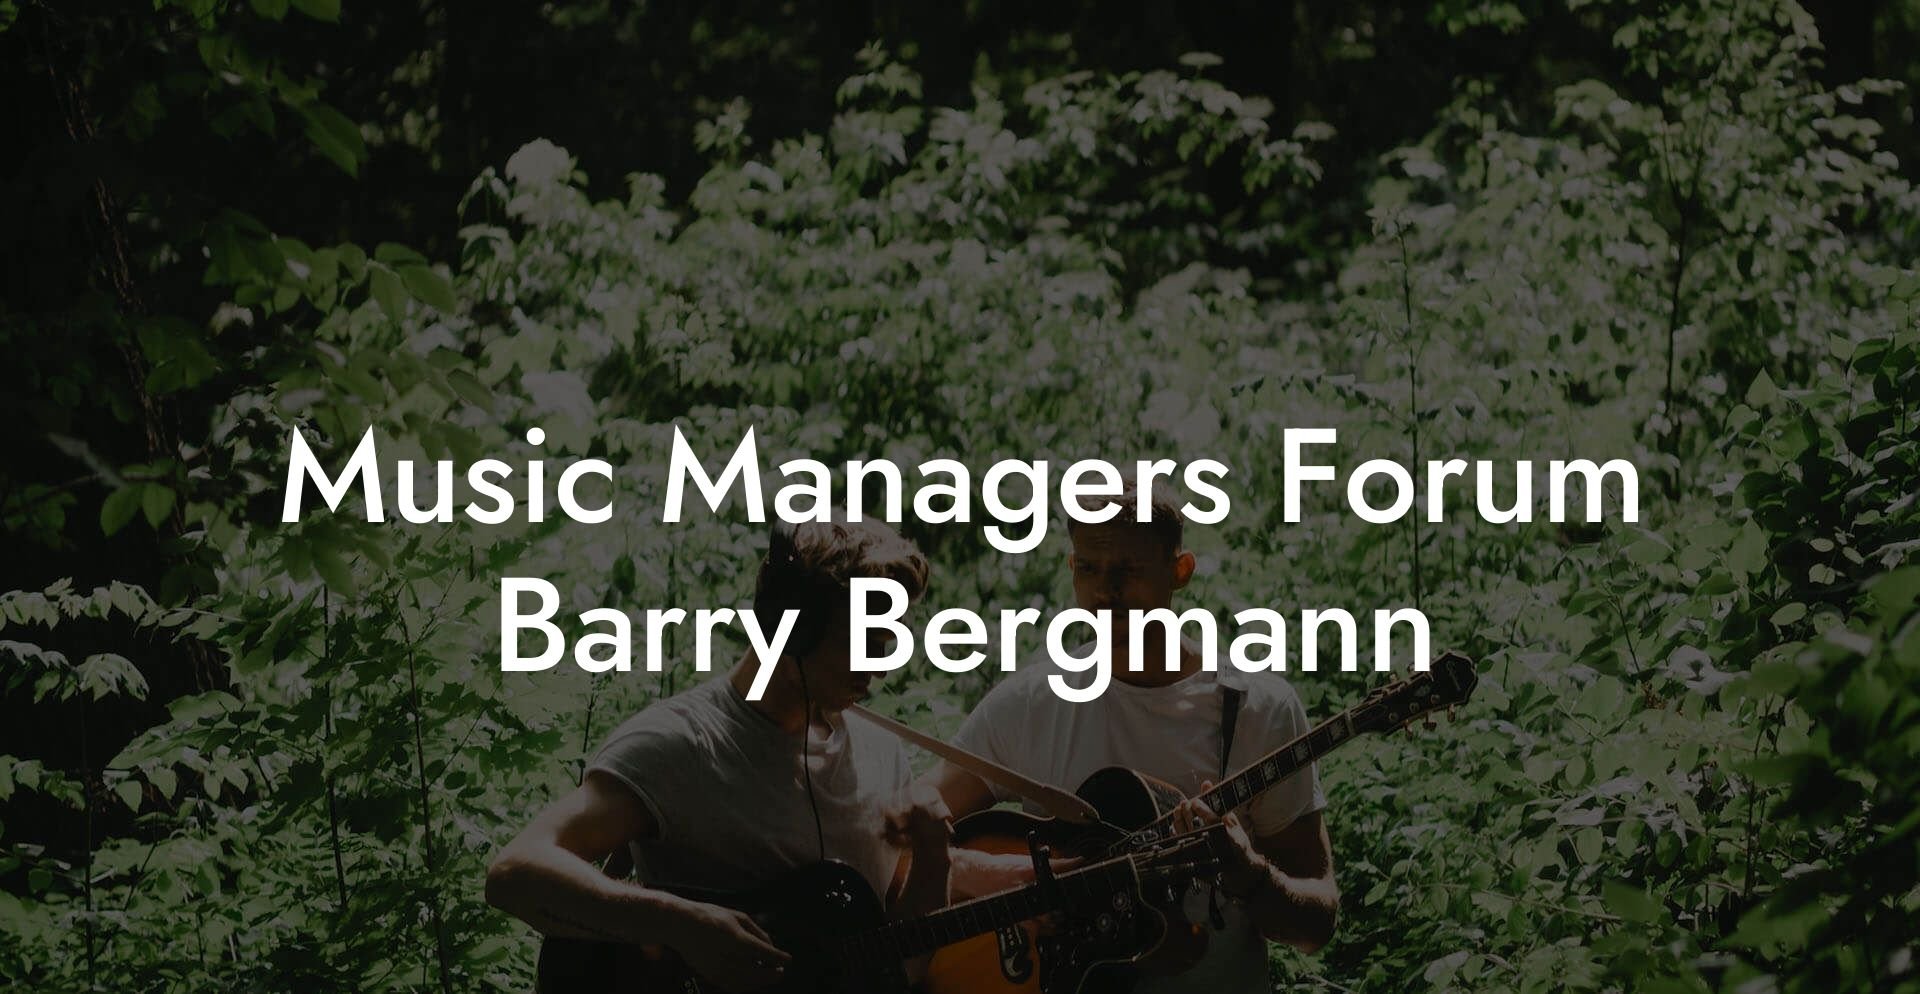 Music Managers Forum Barry Bergmann